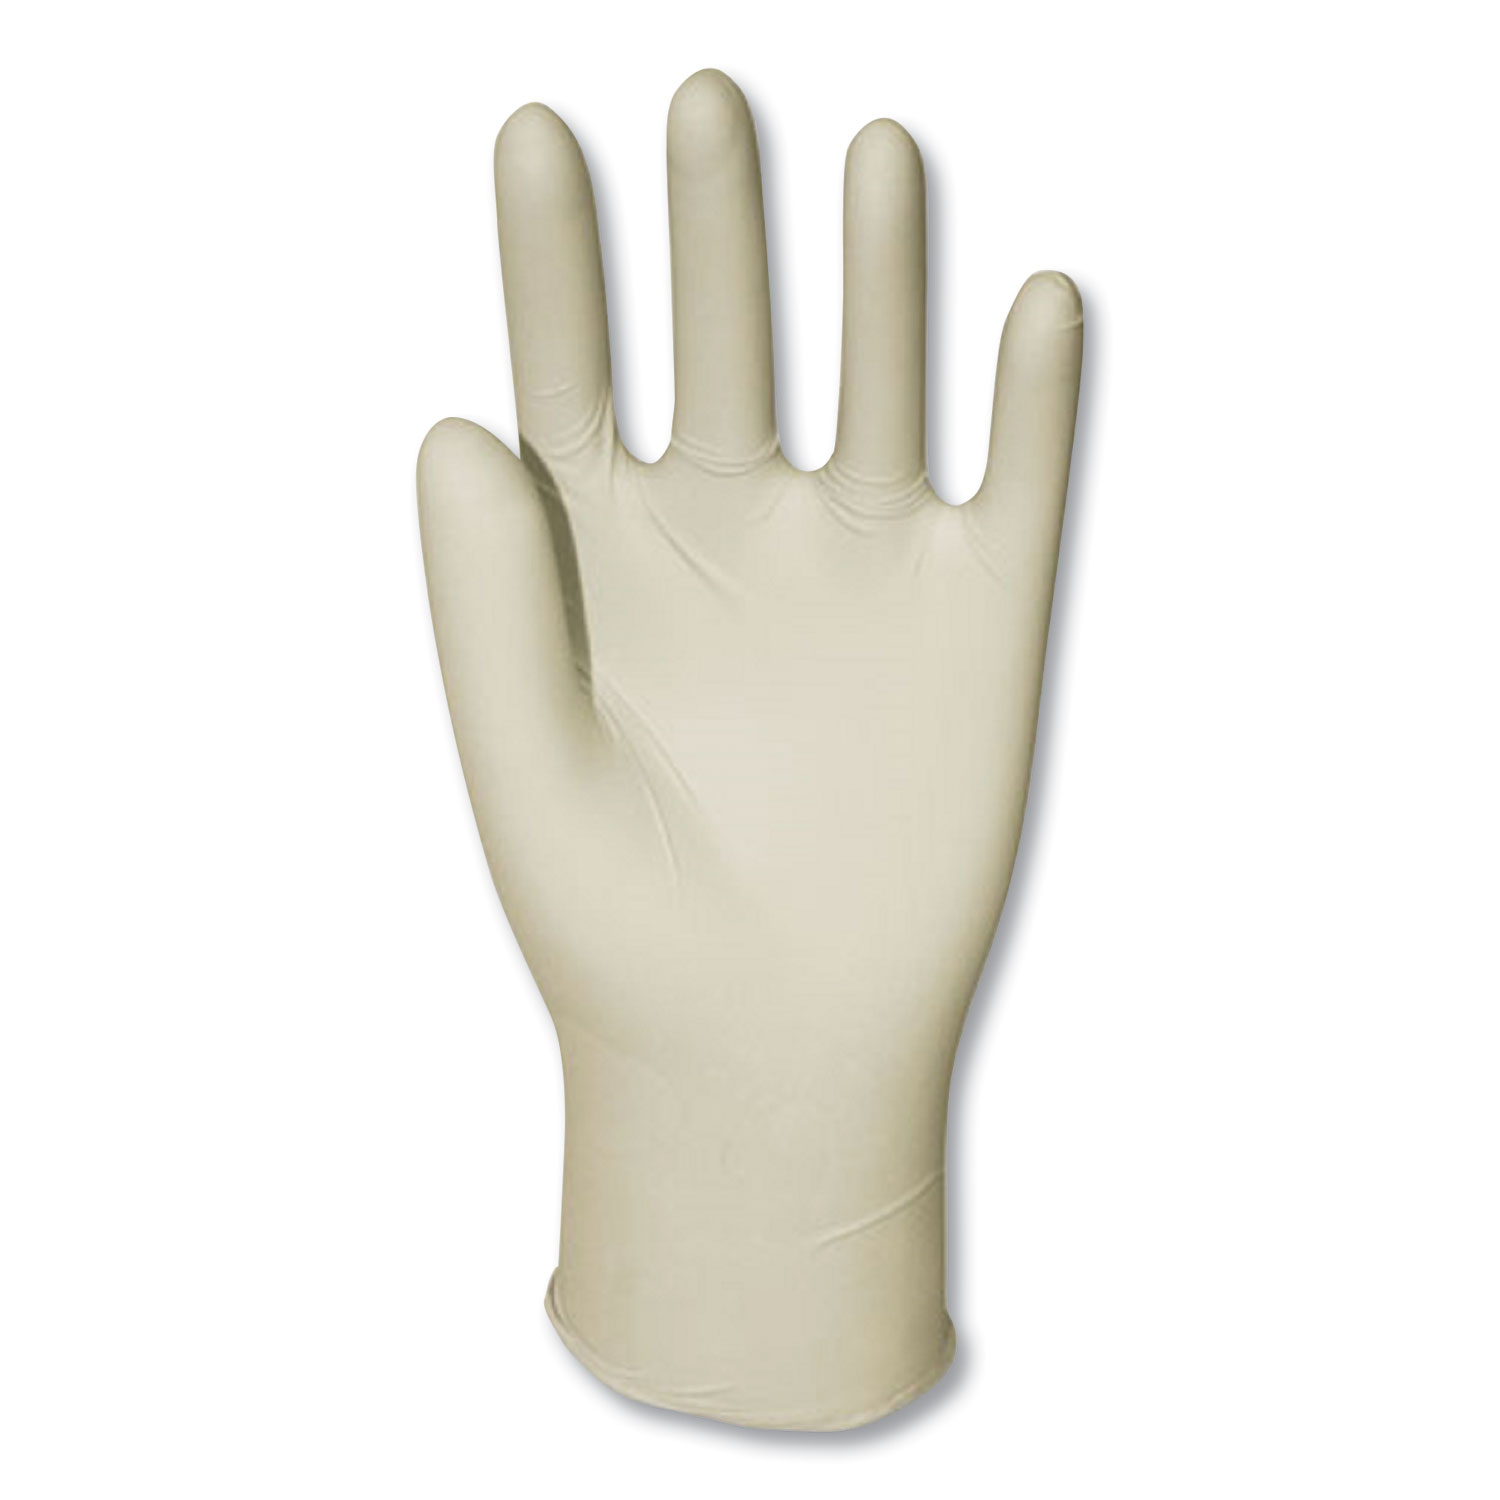  GN1 315MCT Powder-Free Synthetic Vinyl Gloves, Medium, Cream, 1,000/Carton (GN1315MCT) 